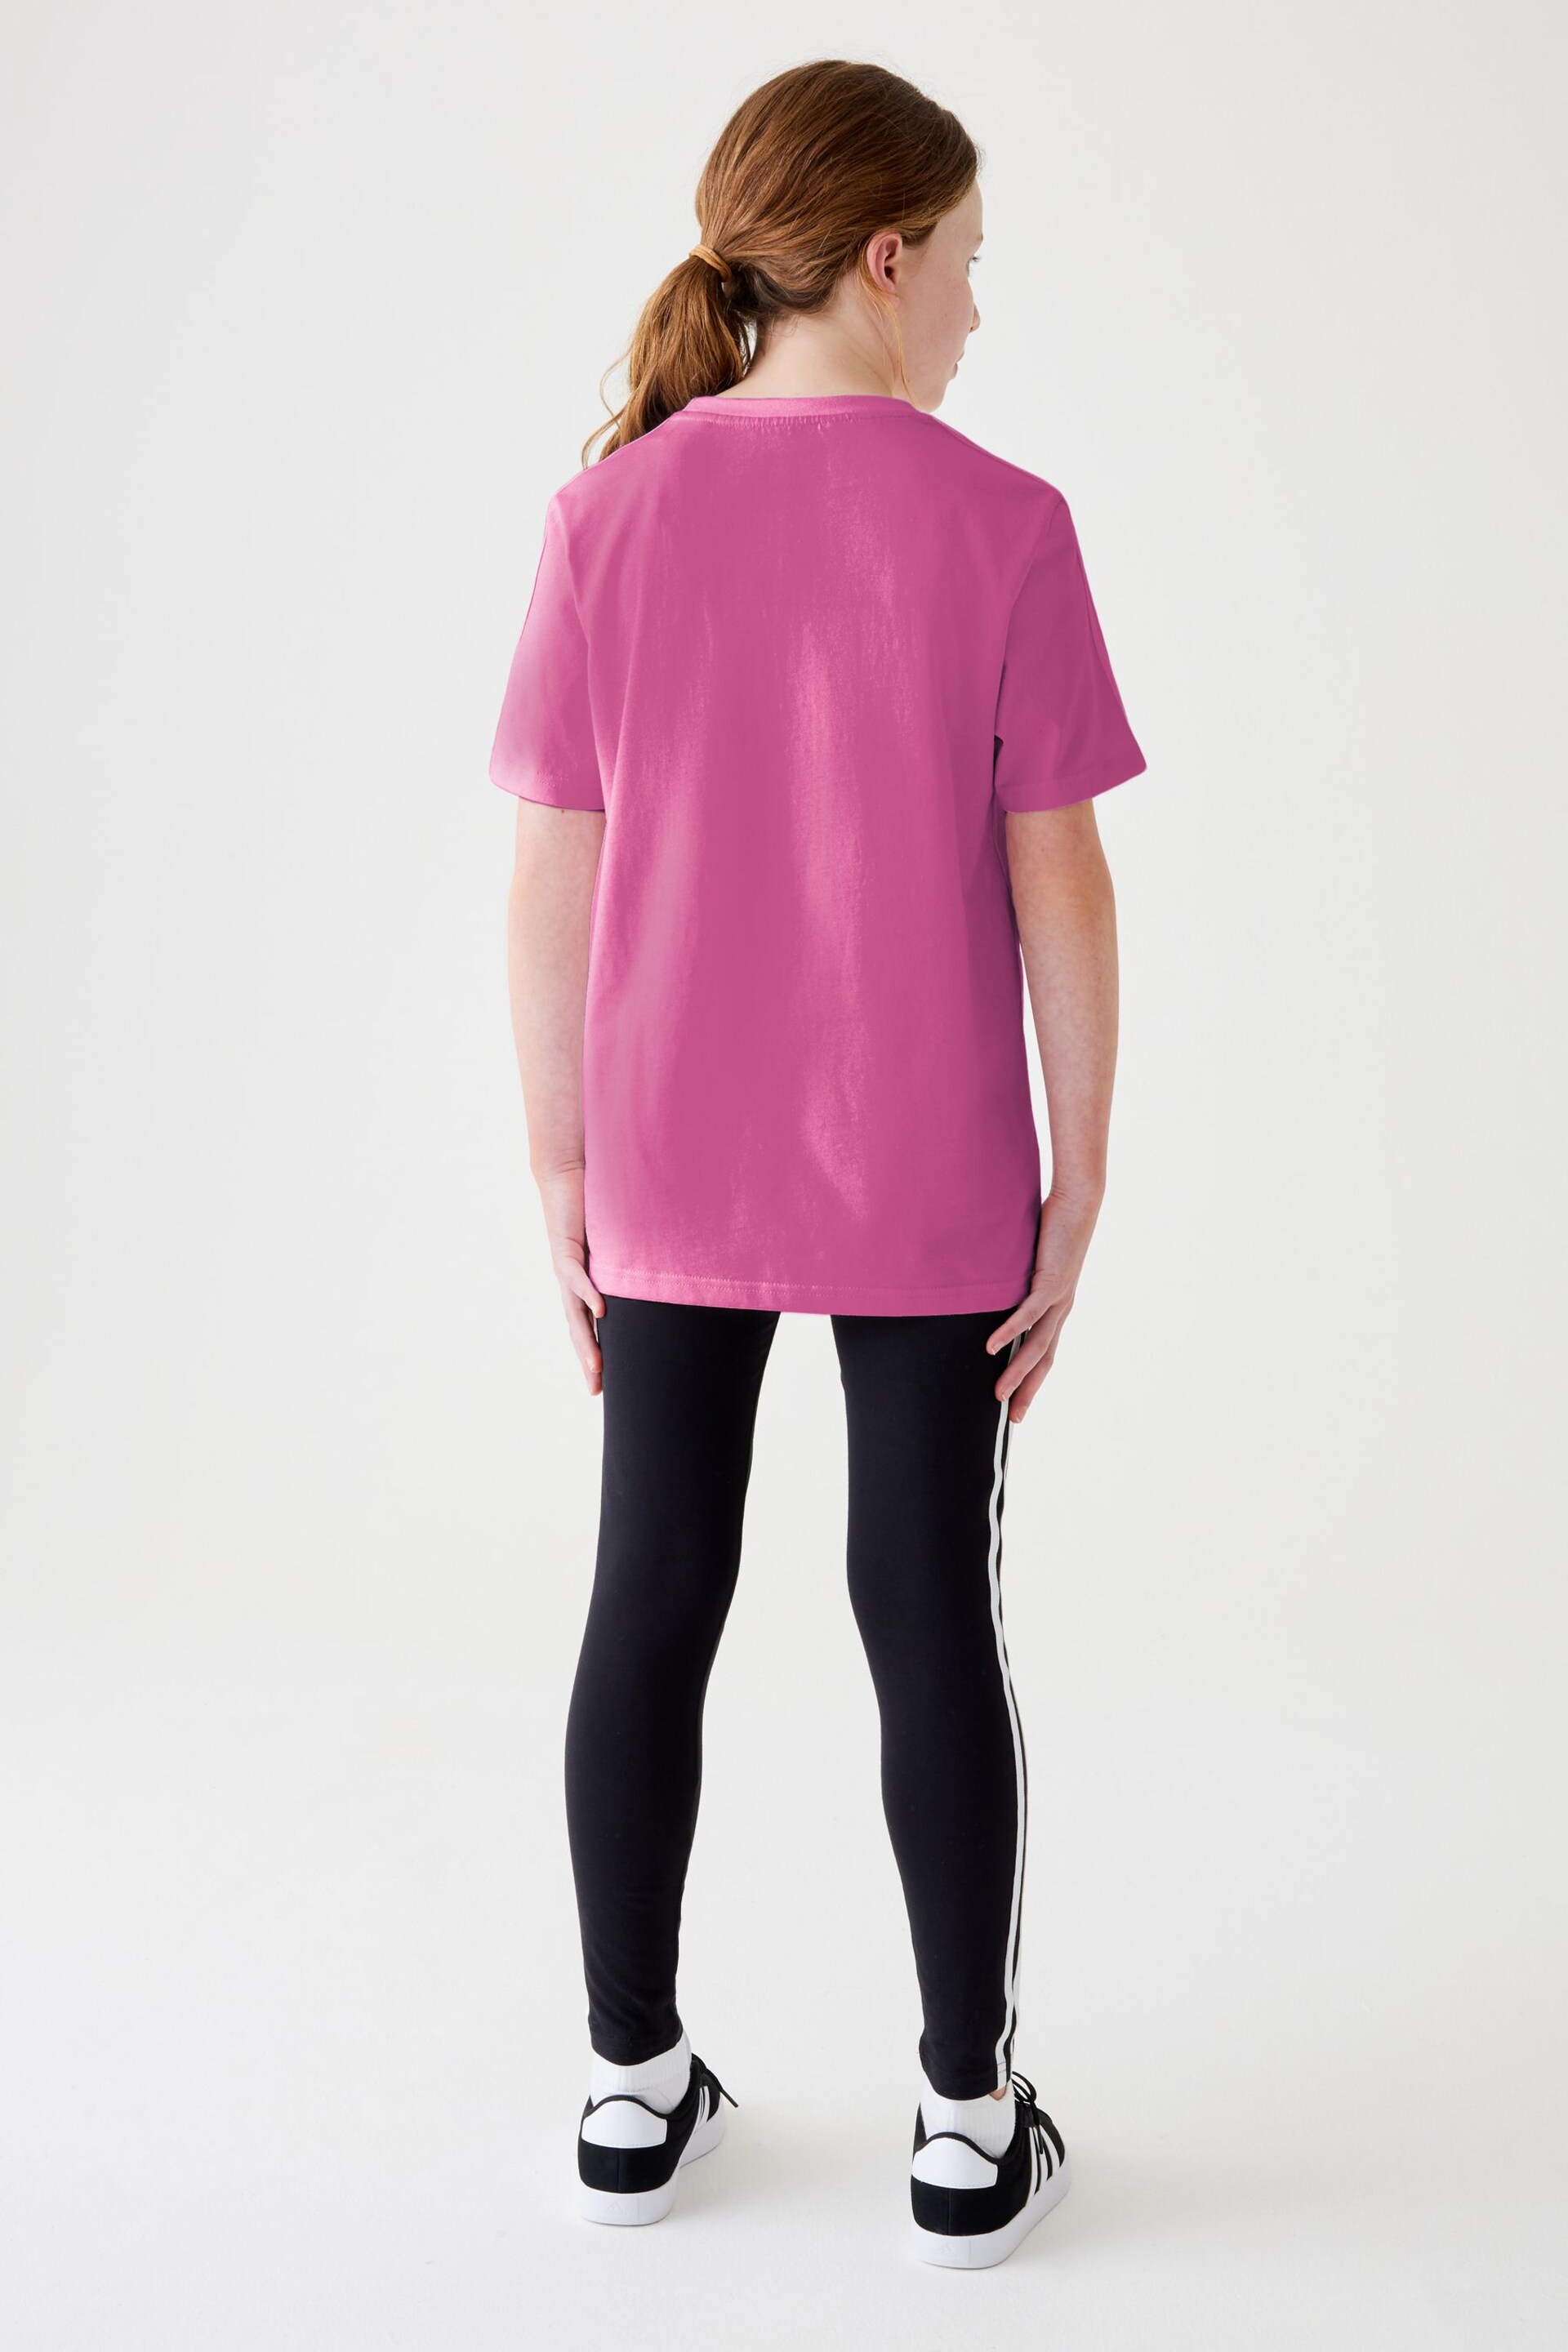 adidas Pink Boyfriend Loose Fit Sportswear Essentials 3-Stripes Cotton T-Shirt - Image 2 of 8